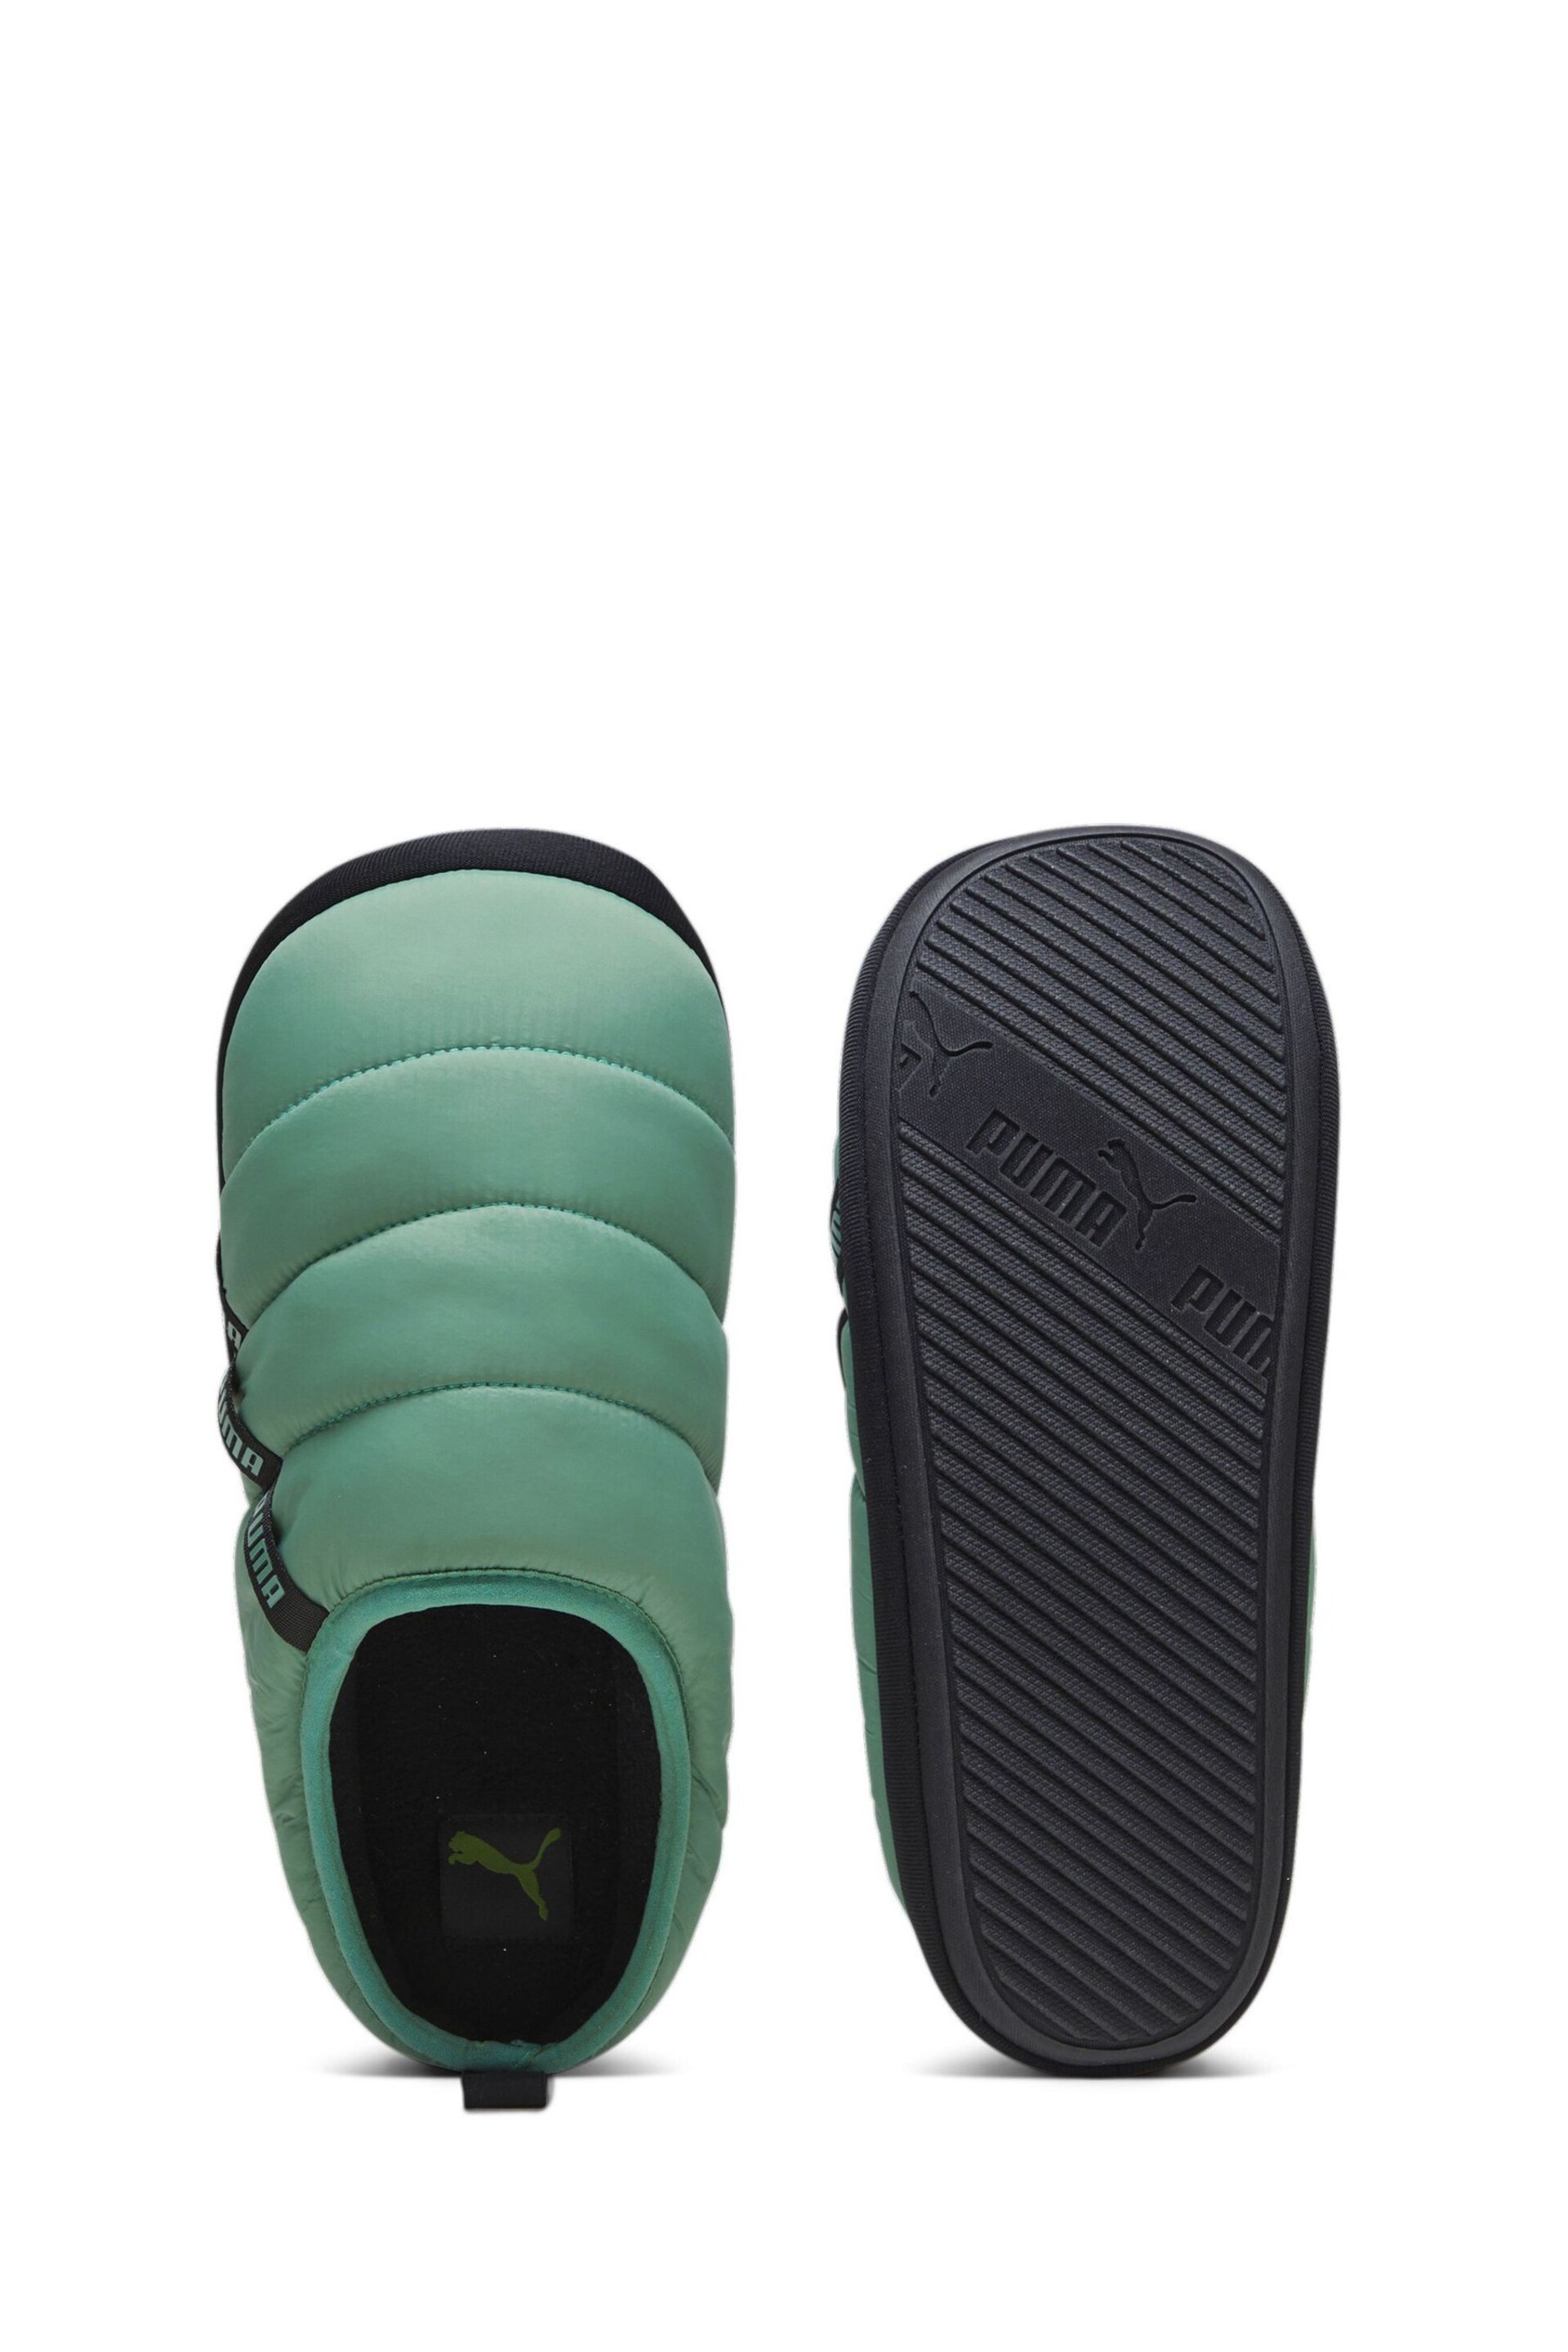 Puma Green Scuff Slippers - Image 5 of 7